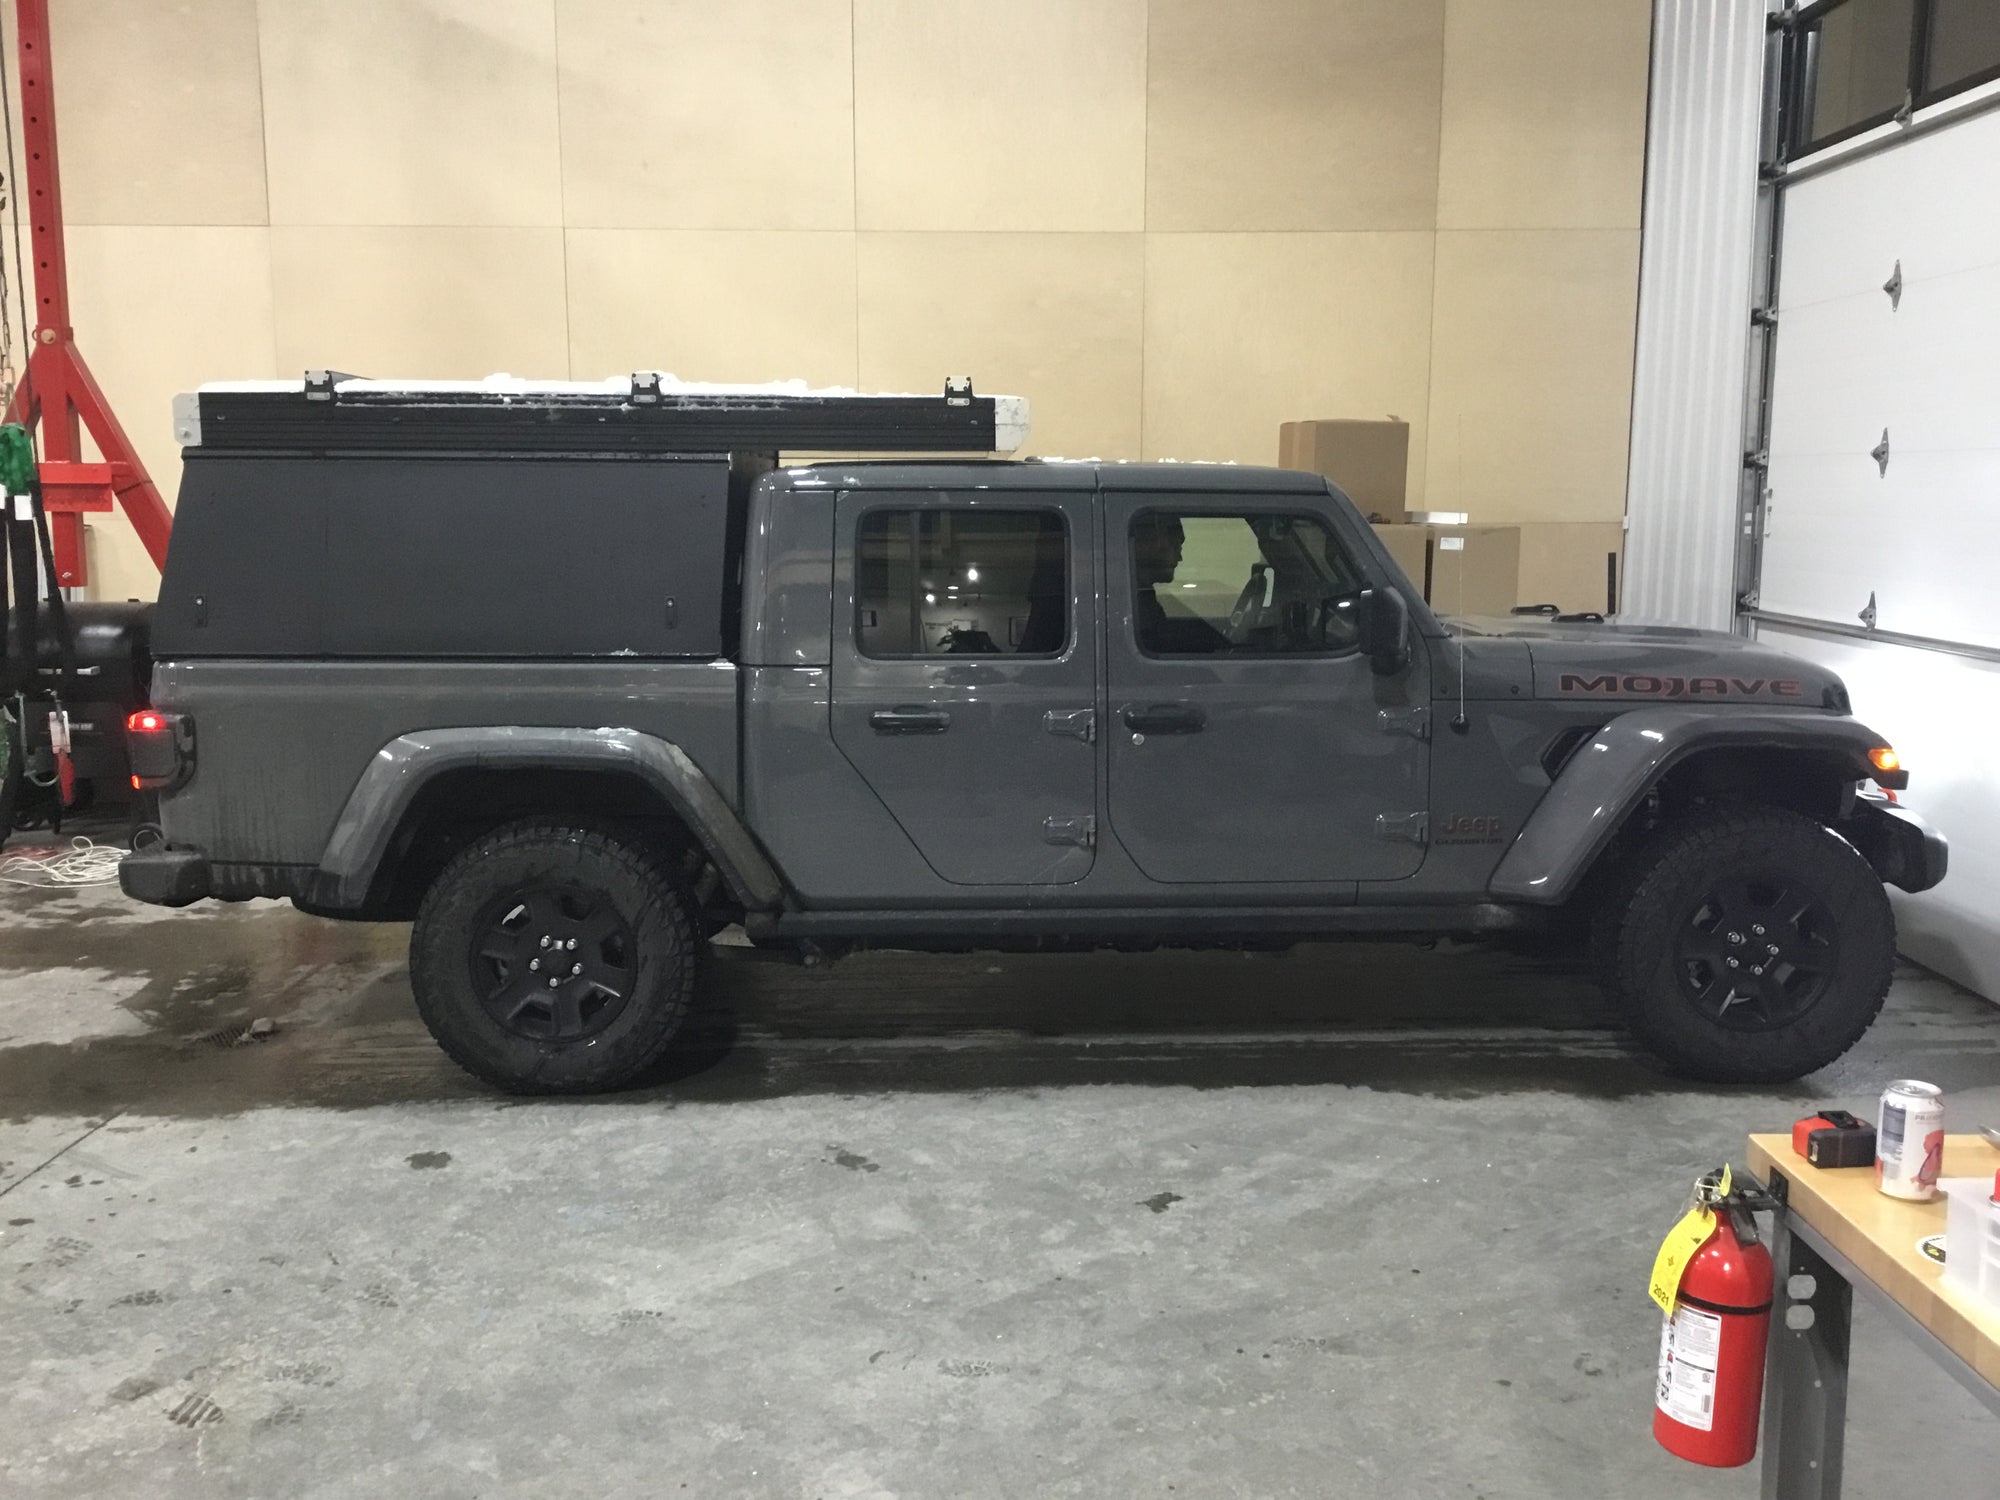 2021 Jeep Gladiator Camper - Build #2598